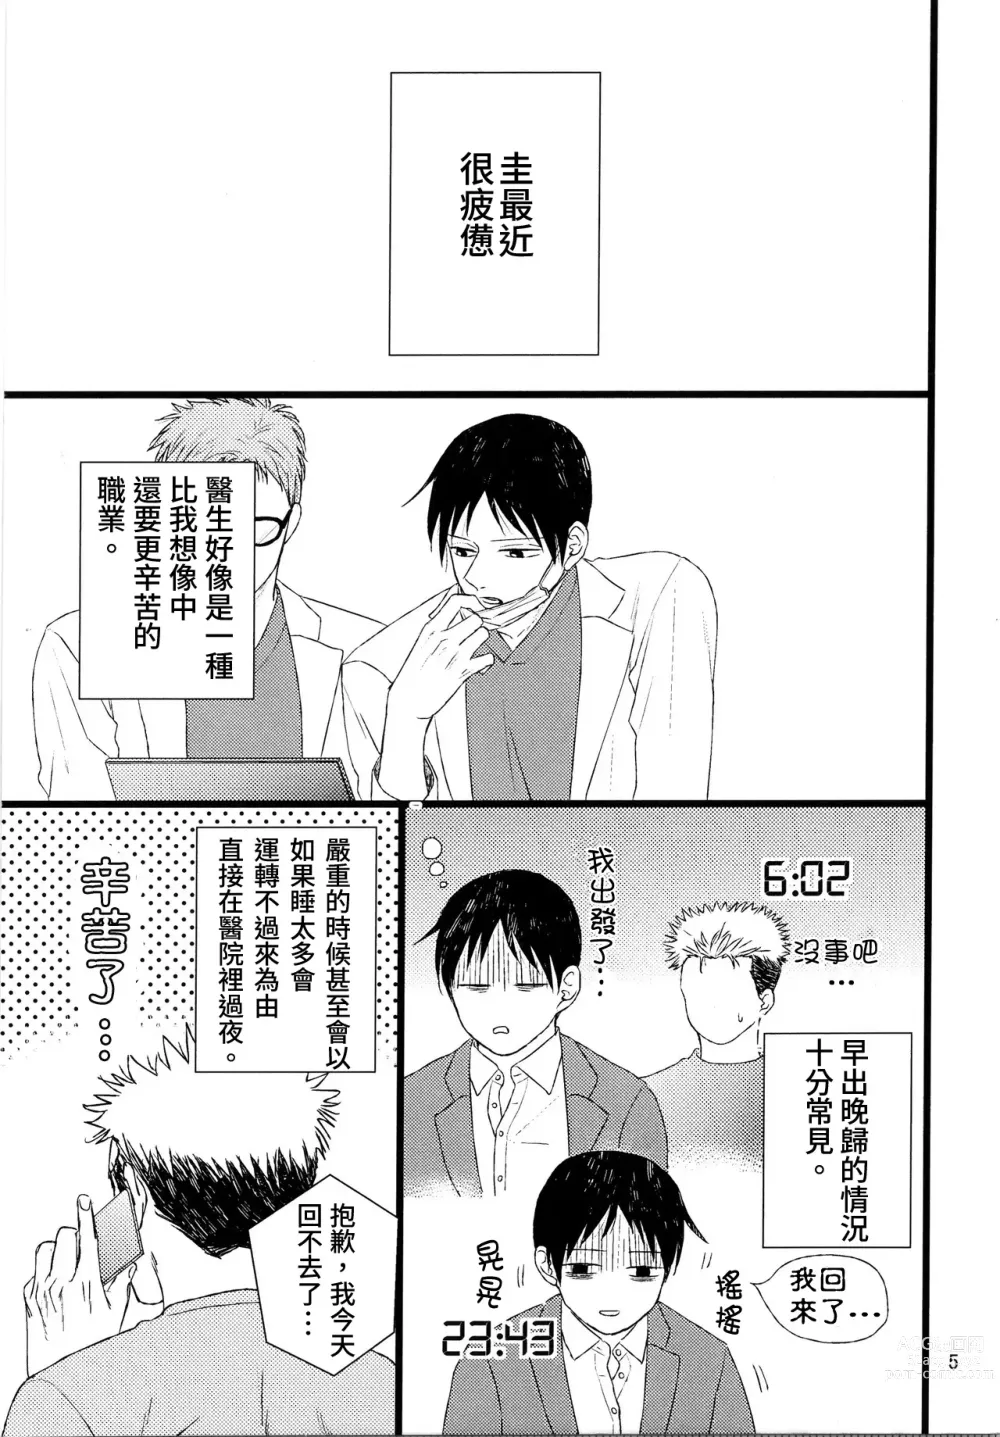 Page 3 of doujinshi Ajin 亜人